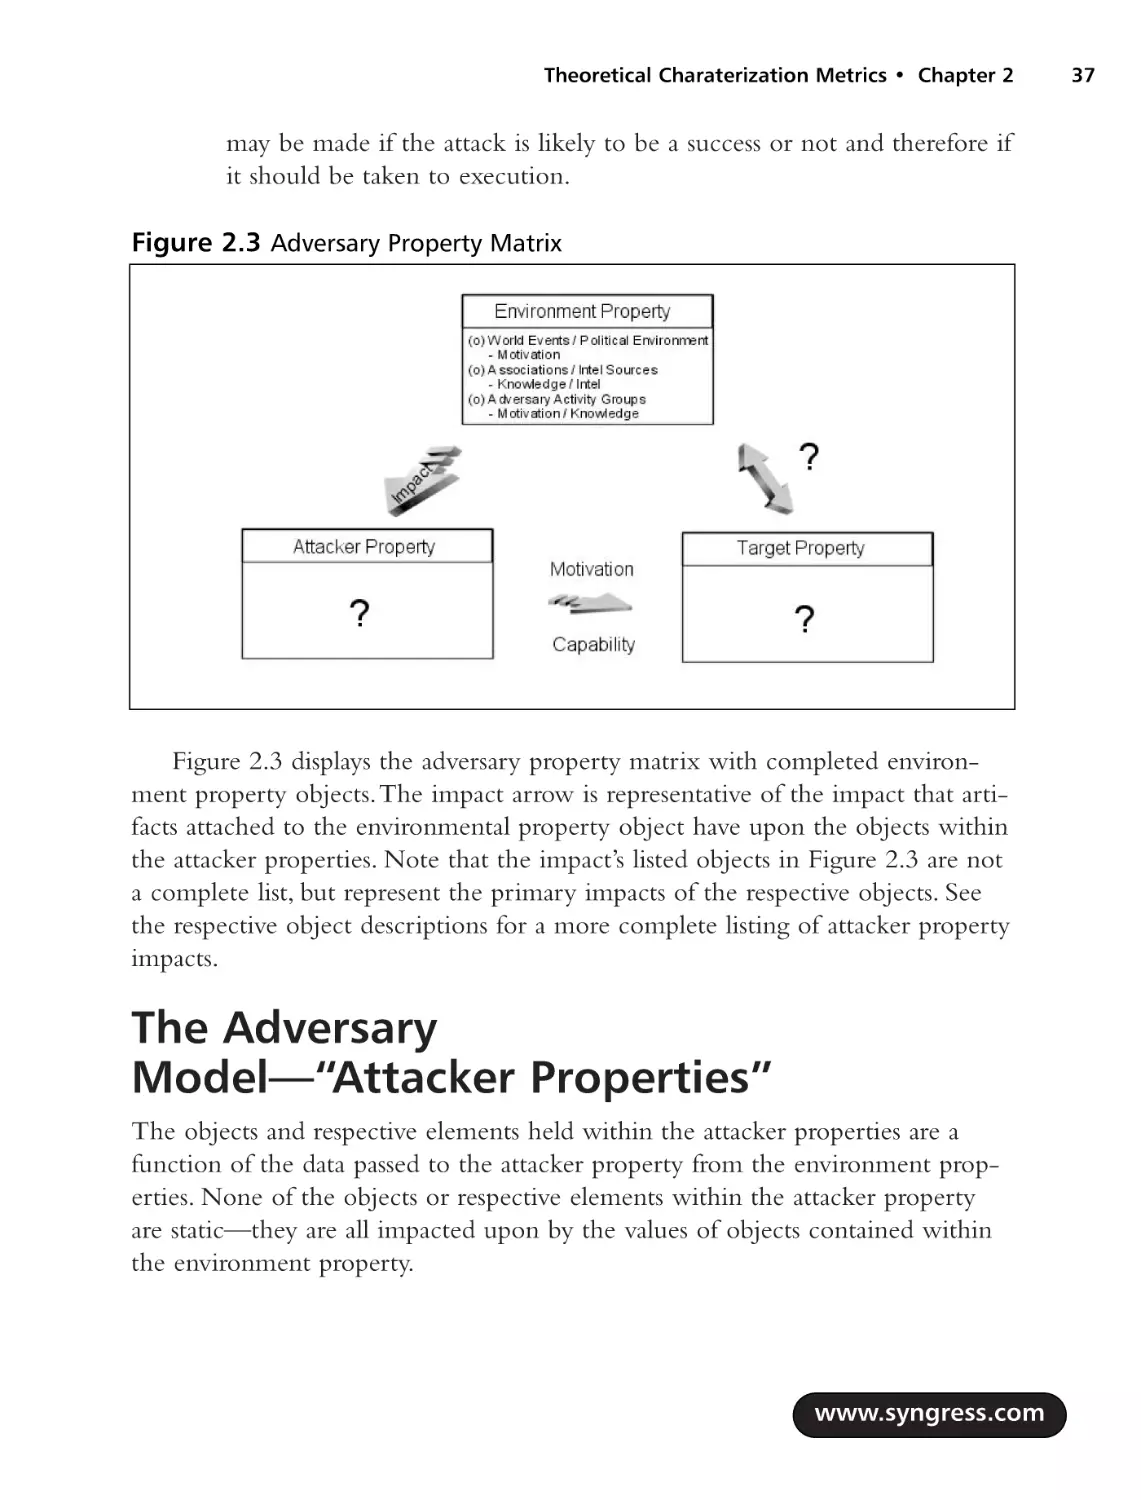 The Adversary Model-"Attacker Properties"